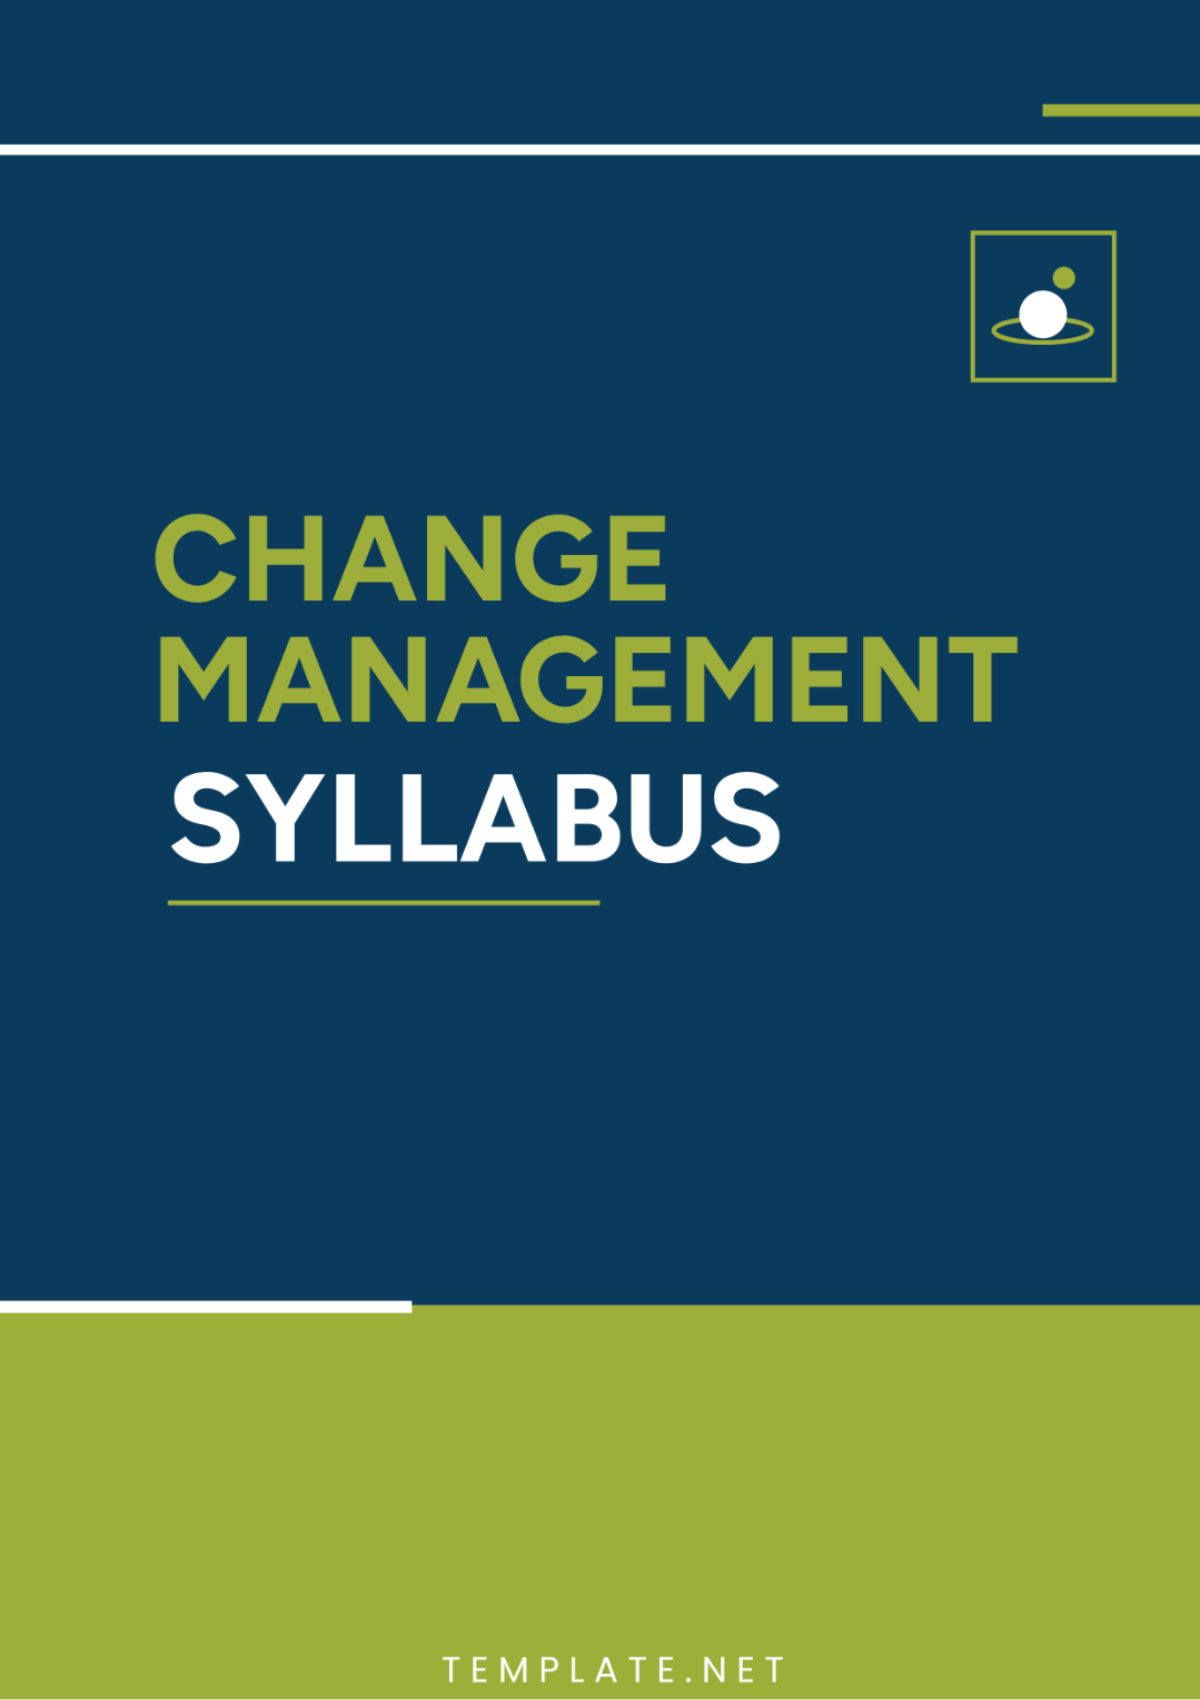 Change Management Syllabus Template